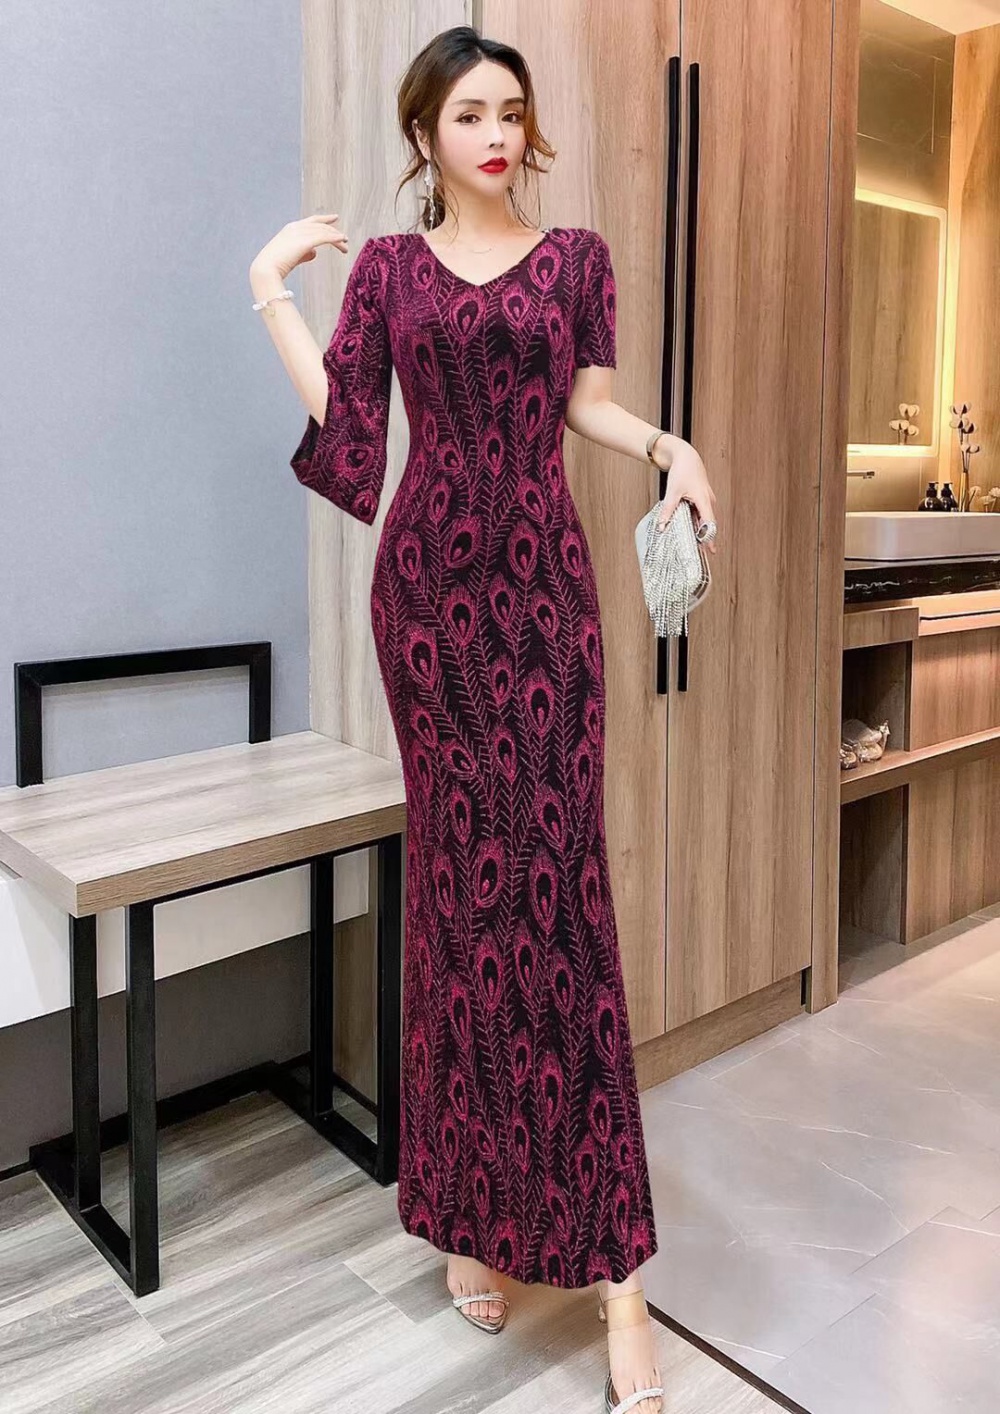 Short sleeve long dress liangsi dress for women